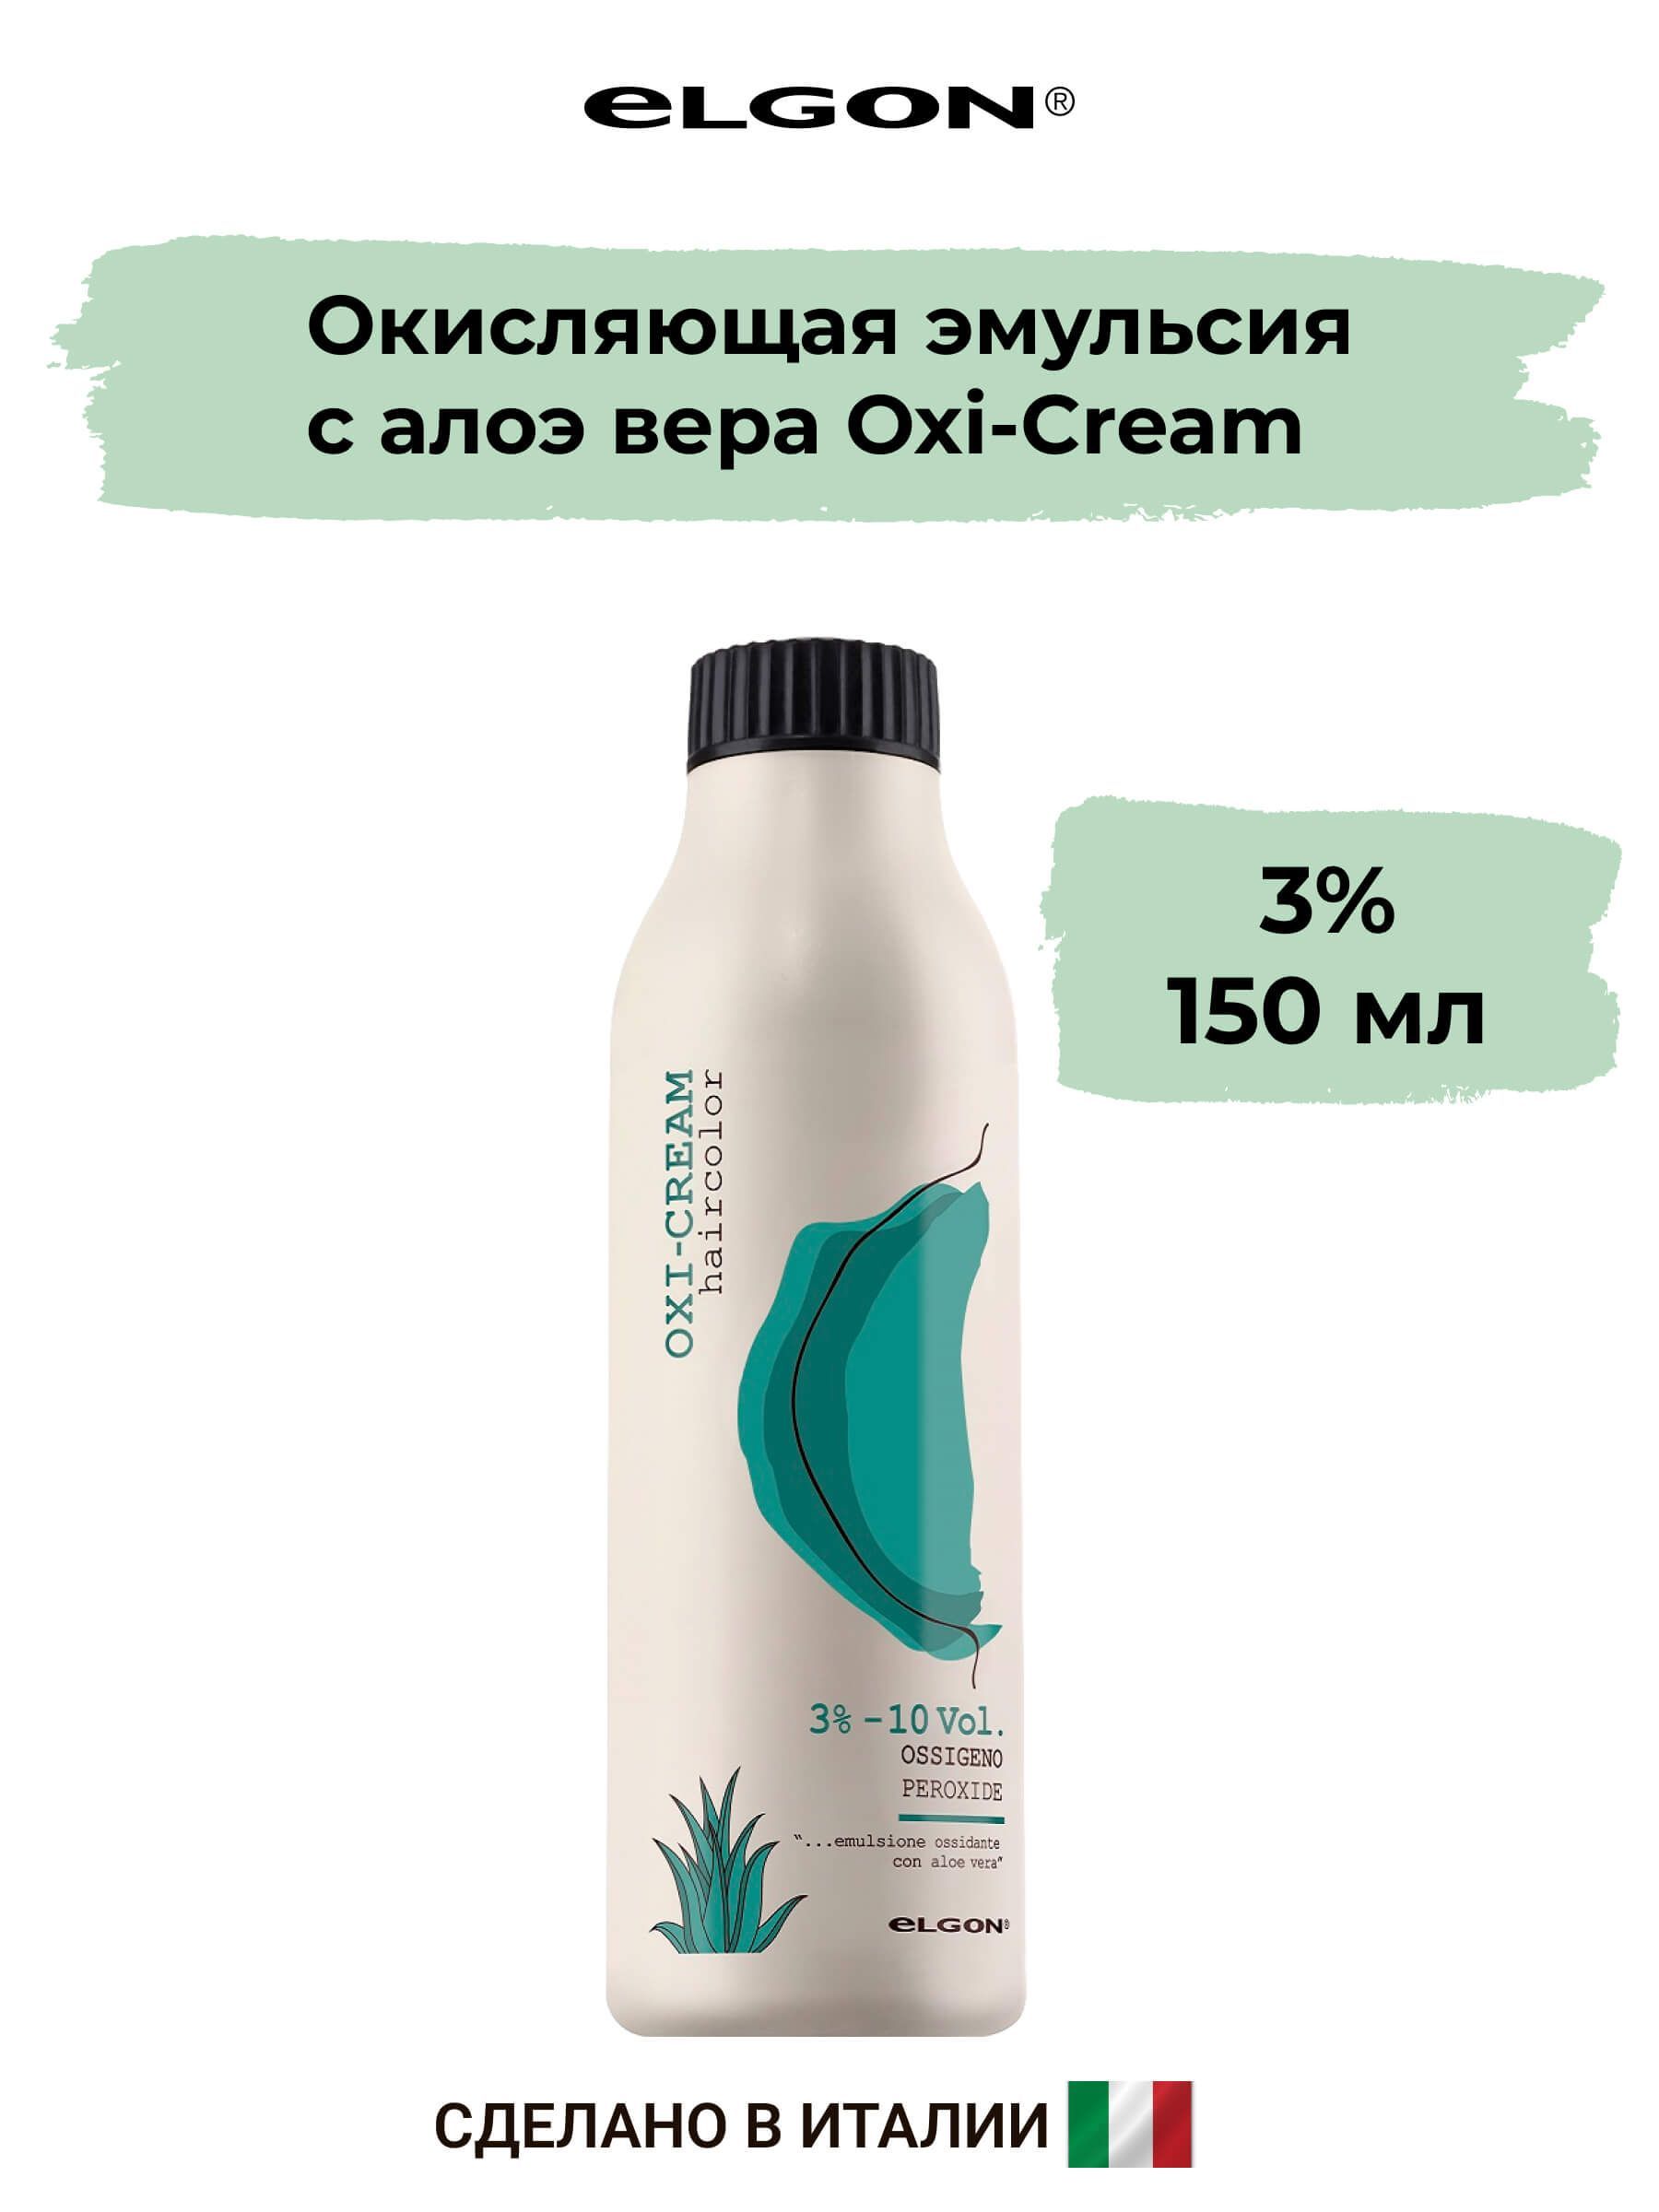 ElgonОкисляющаяэмульсиясалоэвераOxi-Cream3%,150мл.